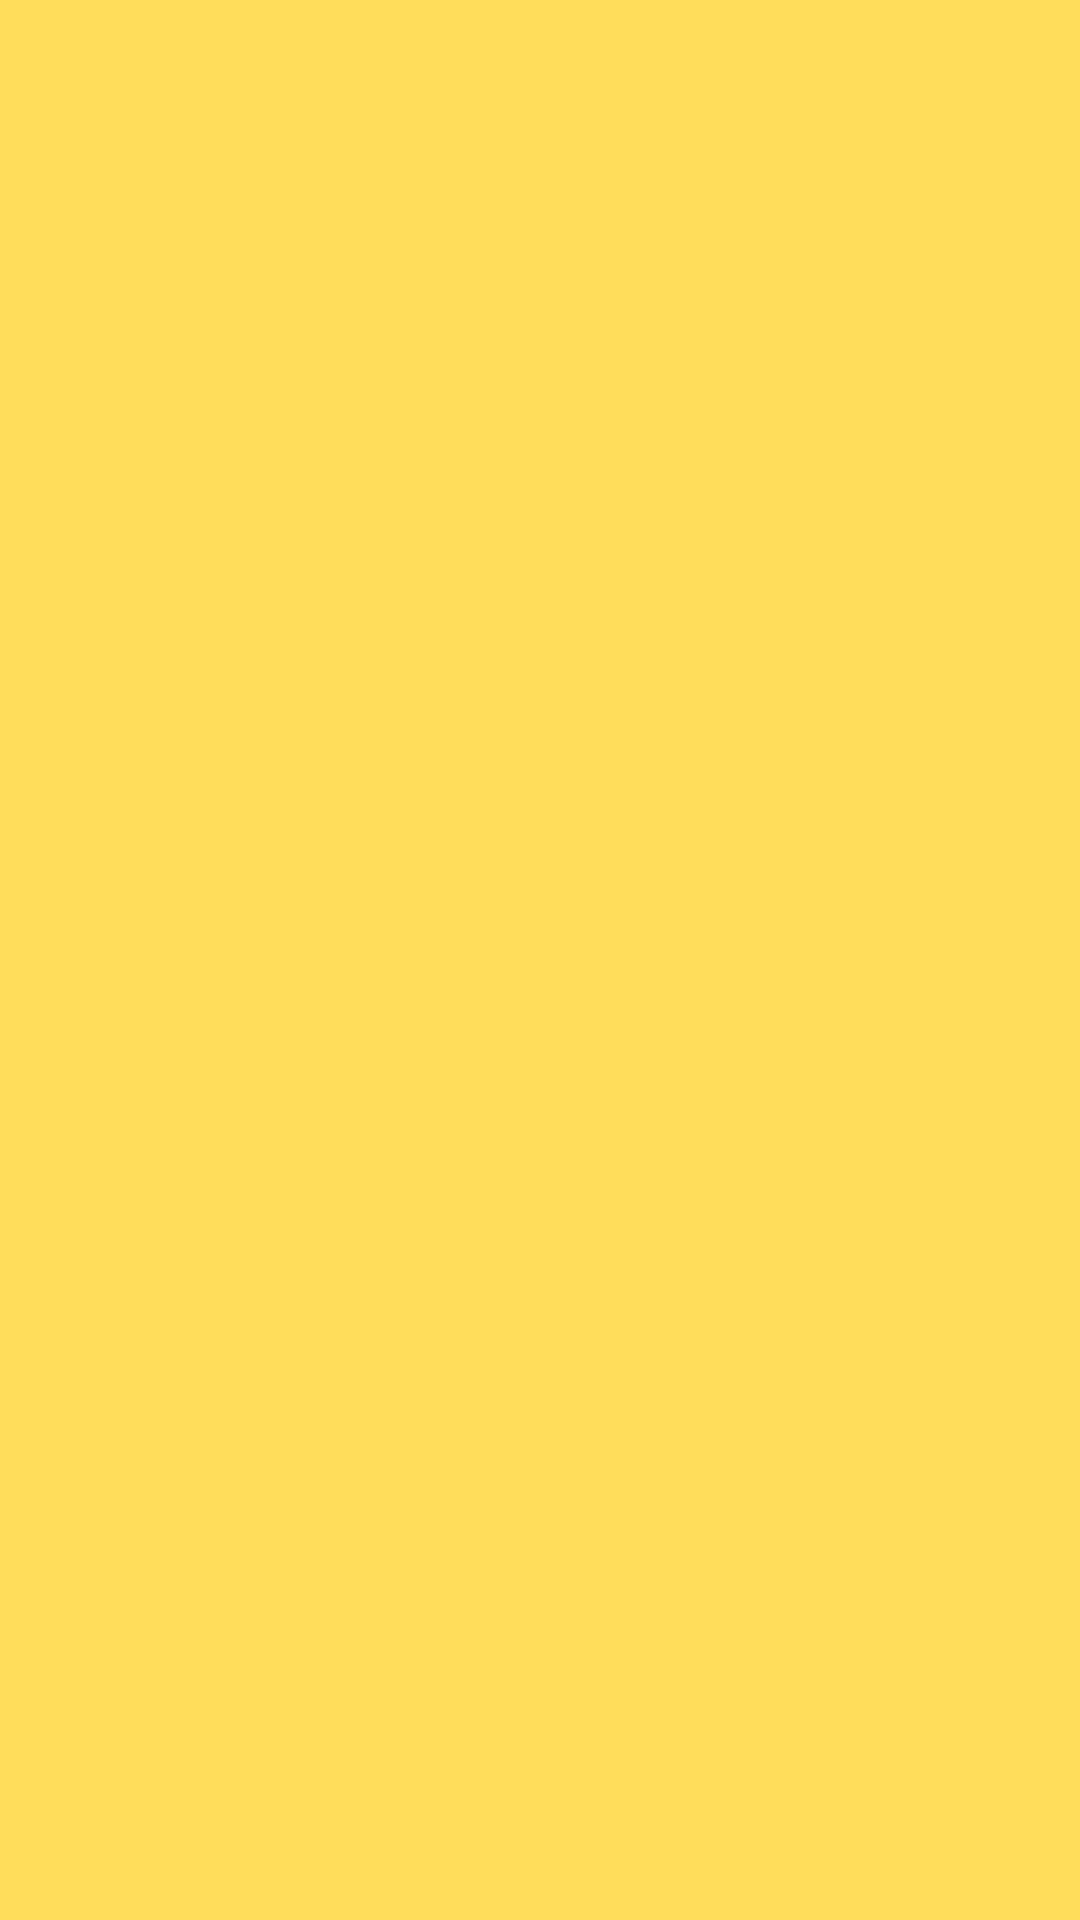 Golden Sunrise: Aesthetic Yellow Background